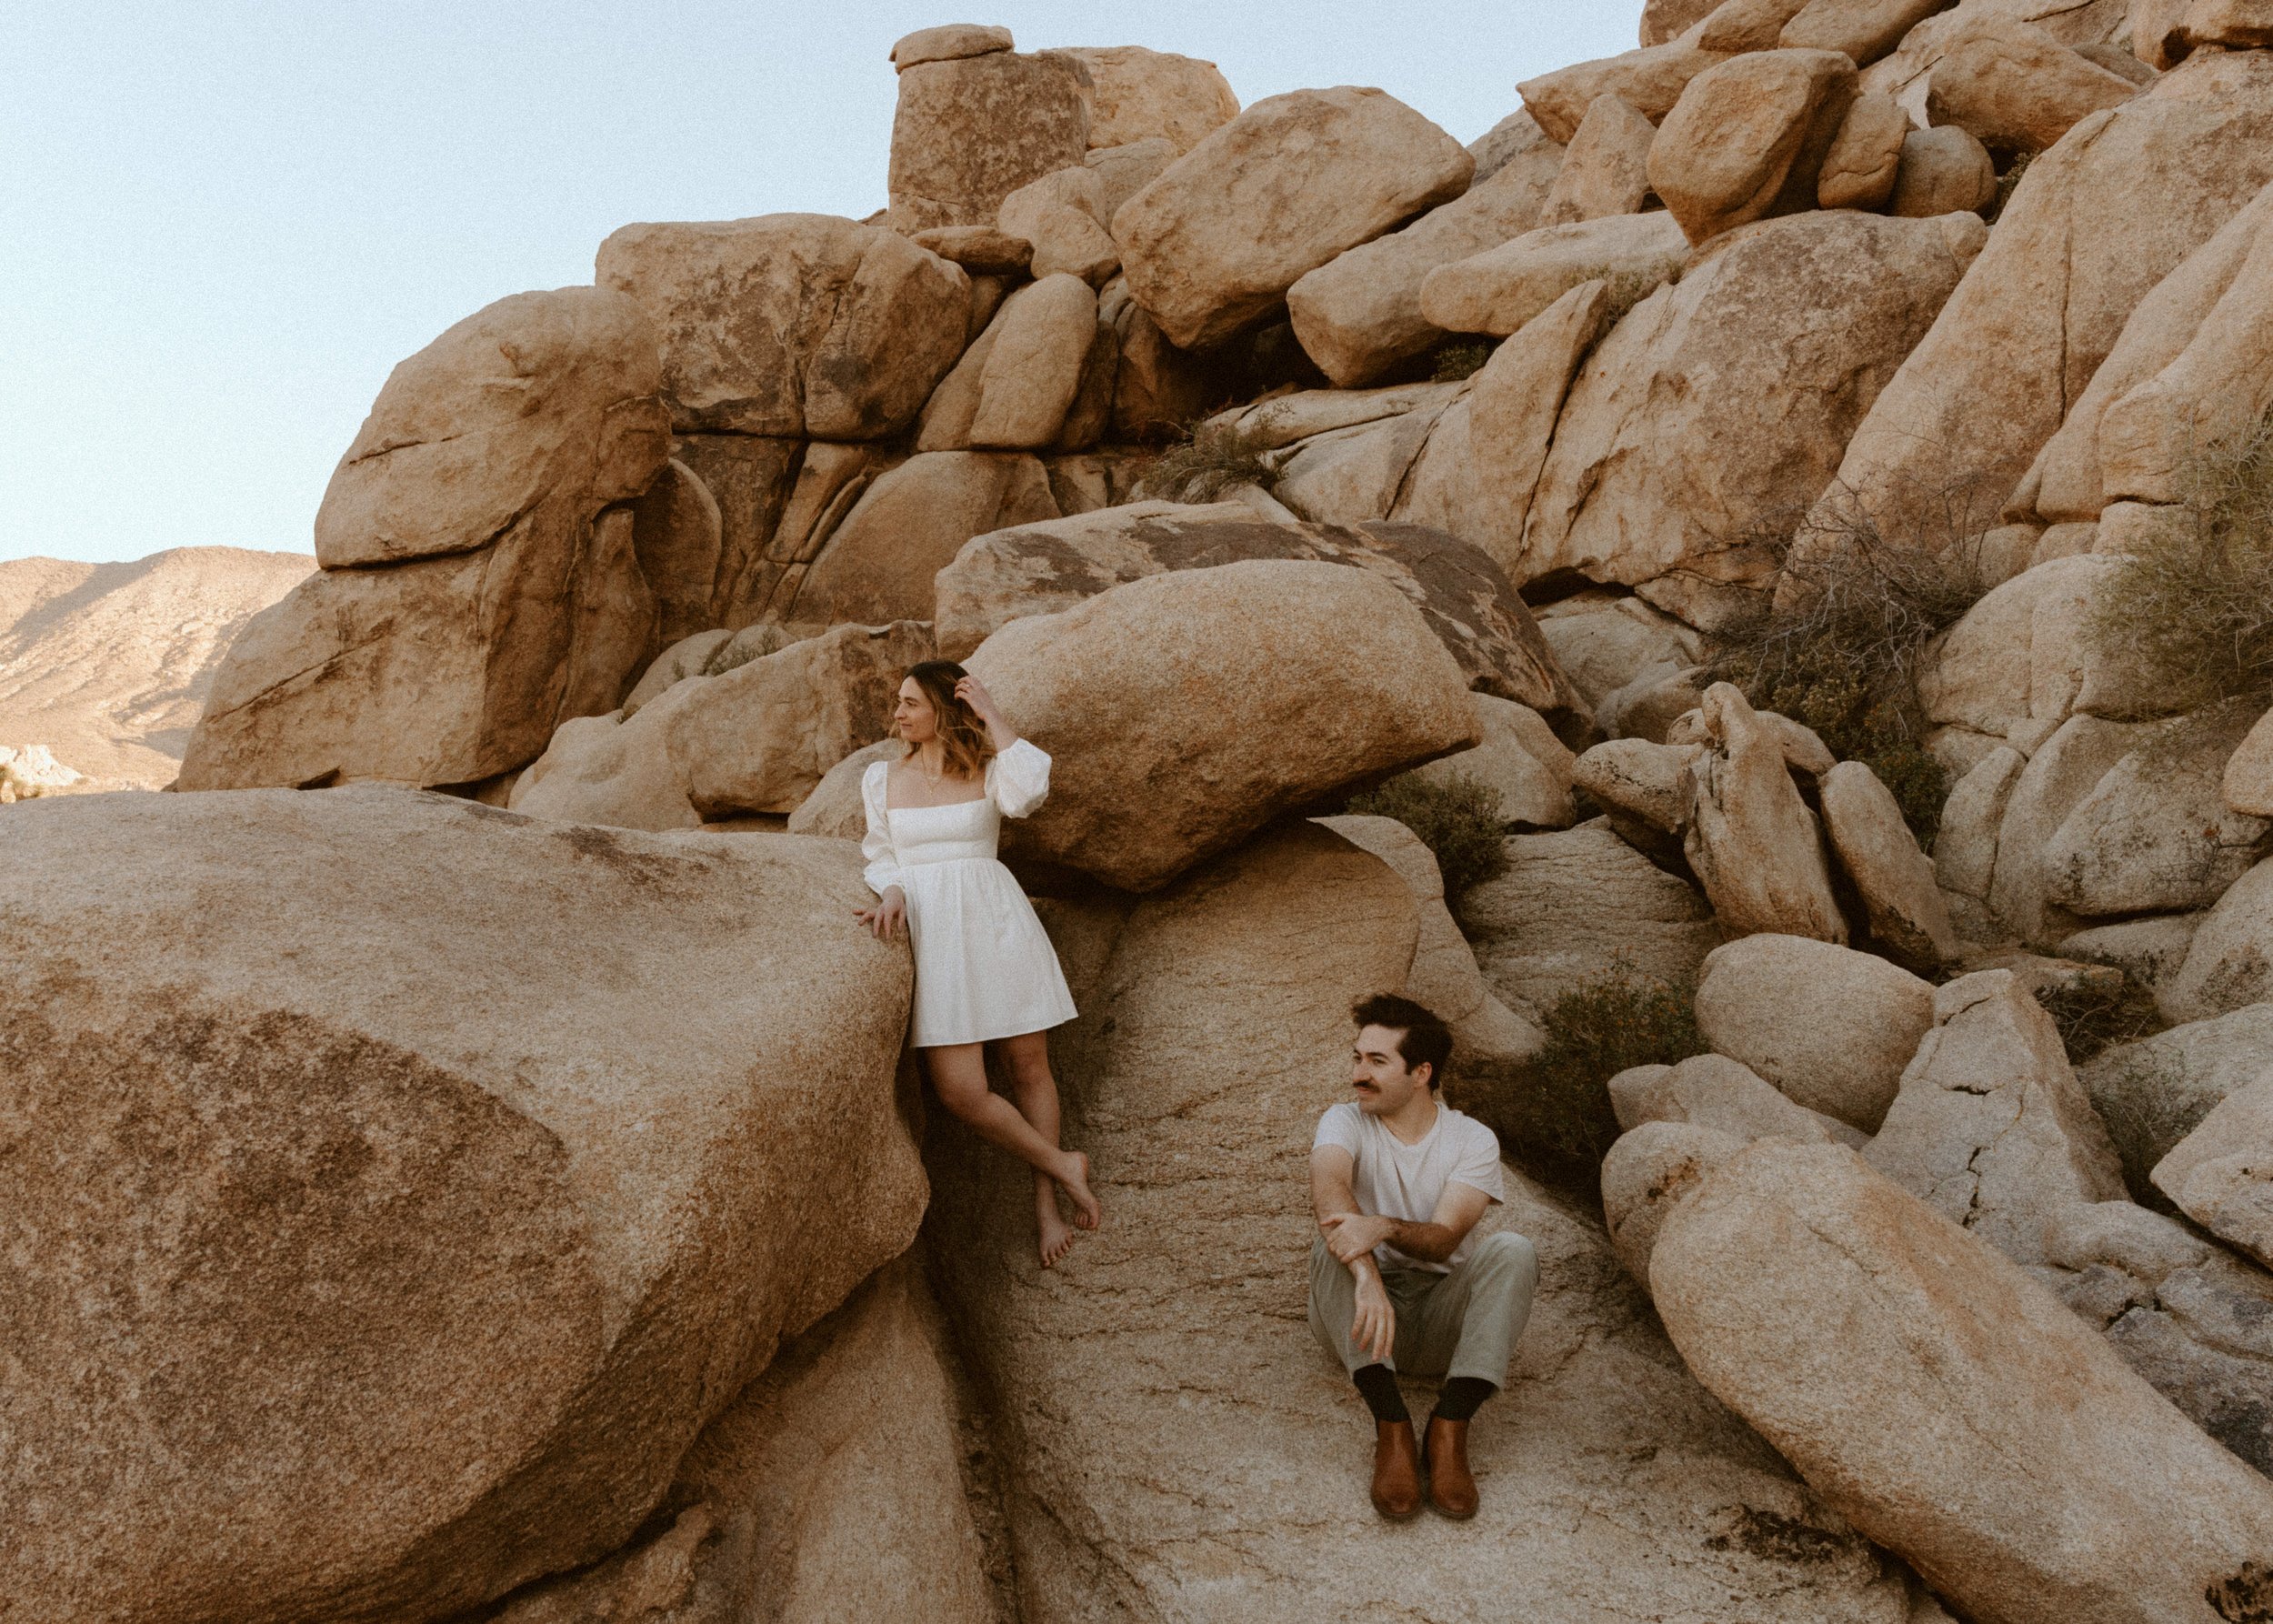 Cap Rock Engagement Session | Joshua Tree National Park | Couple Photography